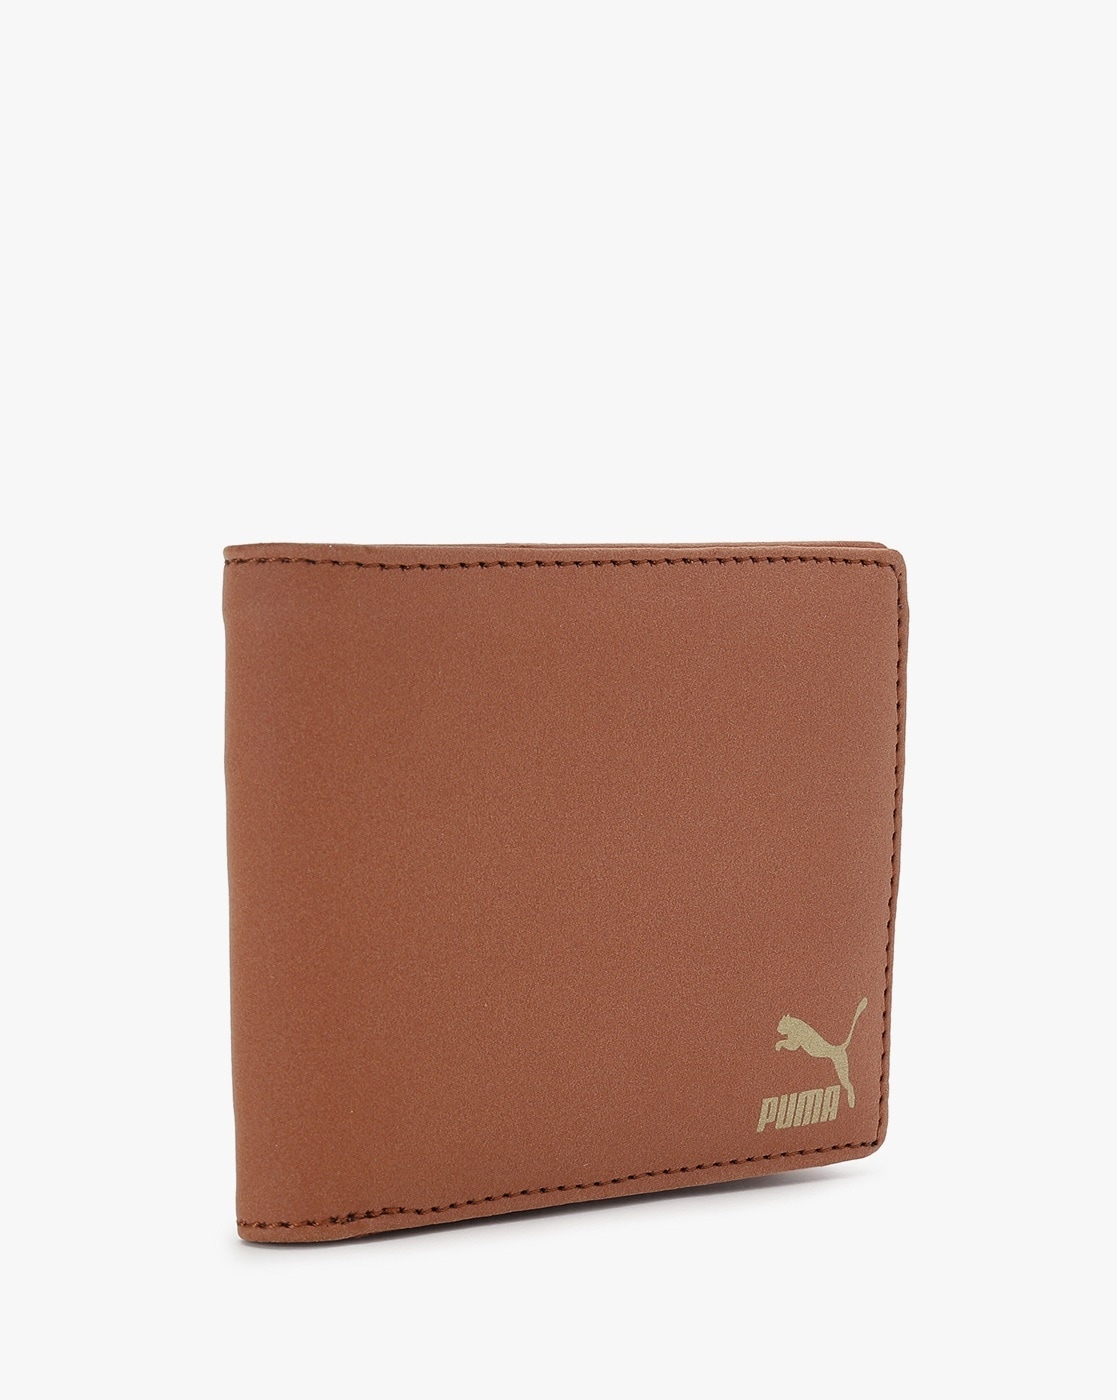 Buy Puma Unisex-Adult Panel Wallet Black (7931301) at Amazon.in